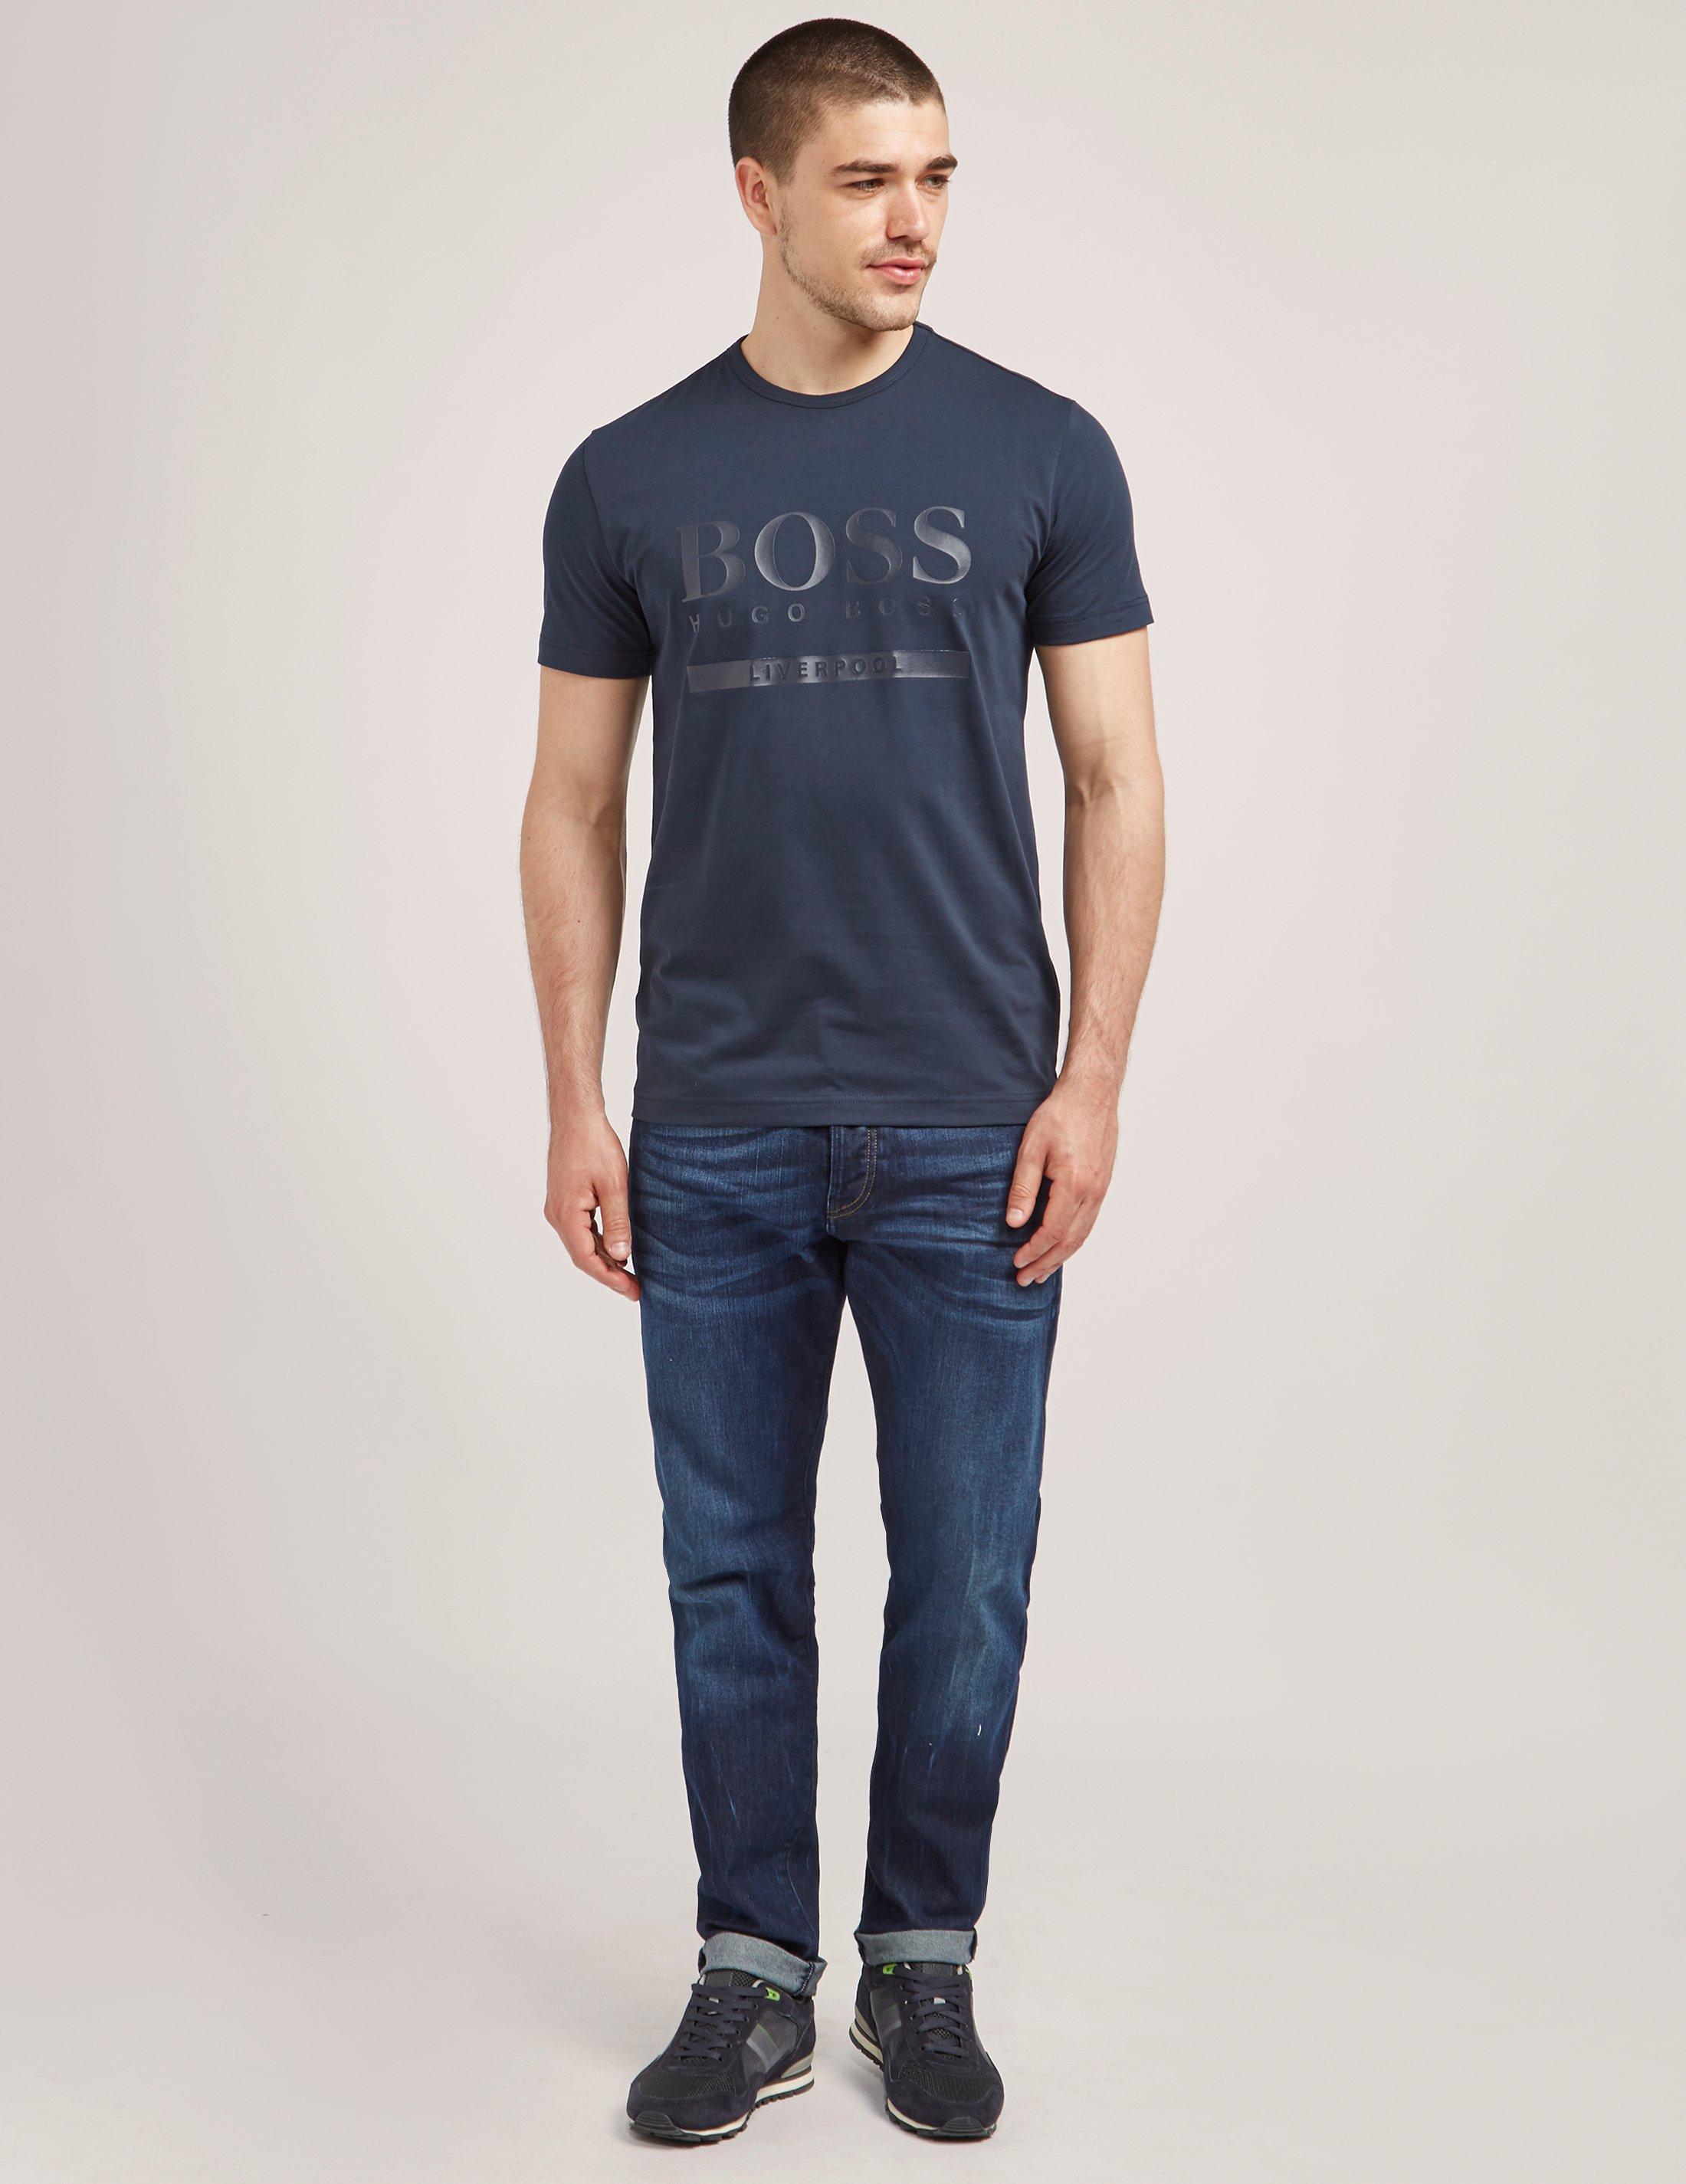 BOSS by HUGO BOSS Cotton Green Liverpool Short Sleeve T-shirt in Navy  (Blue) for Men | Lyst